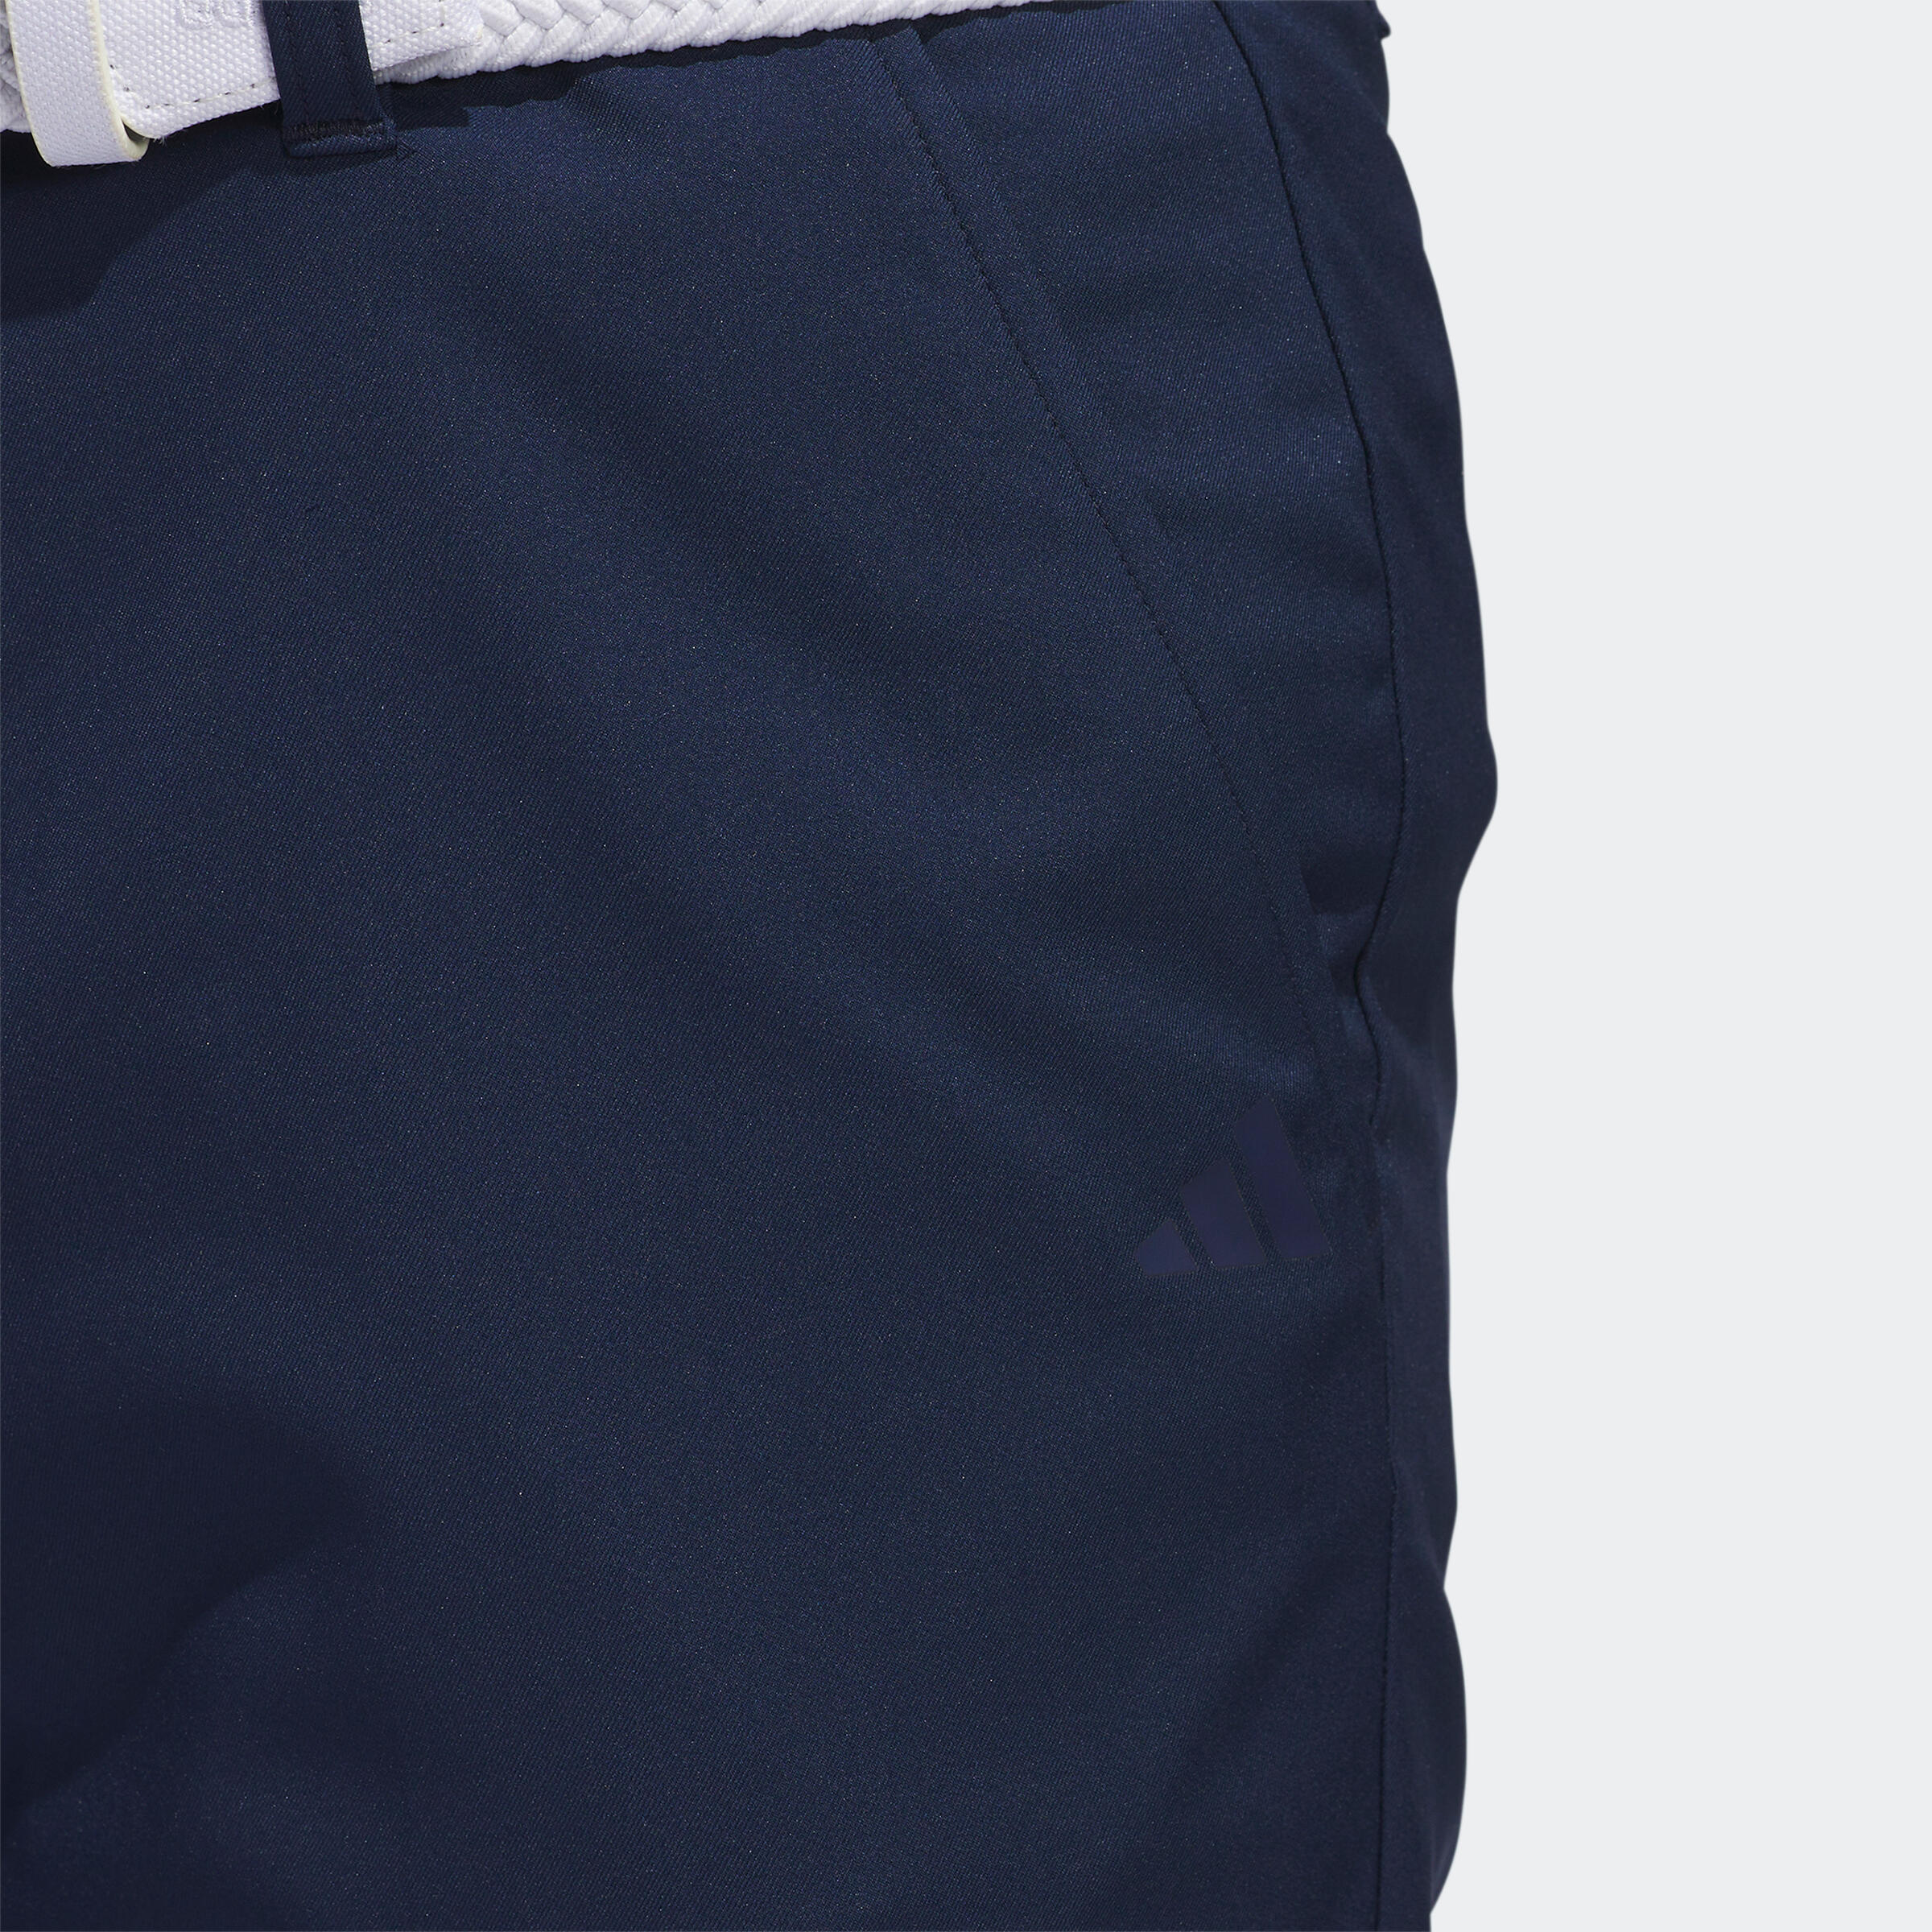 Men's golf Bermuda shorts - Adidas navy blue 4/4